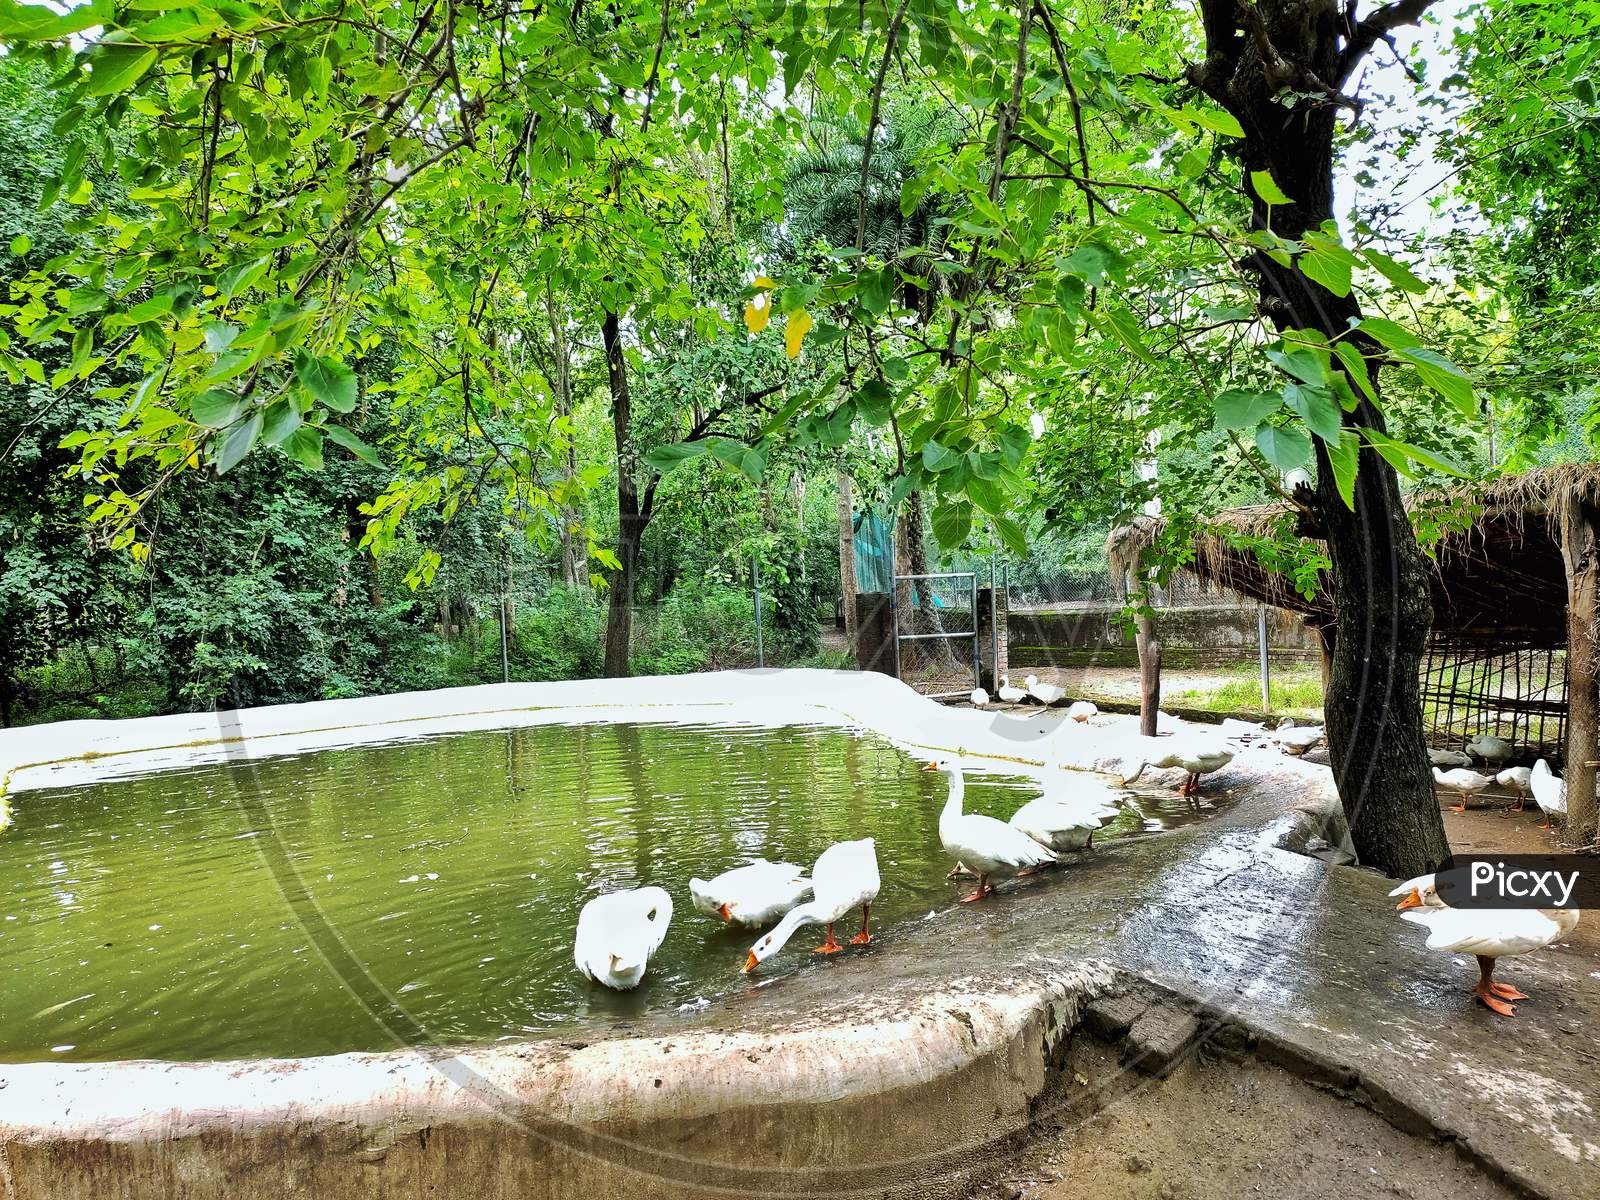 Ducks in a zoo near a pond in Punjab in india in tiger safarii zoo